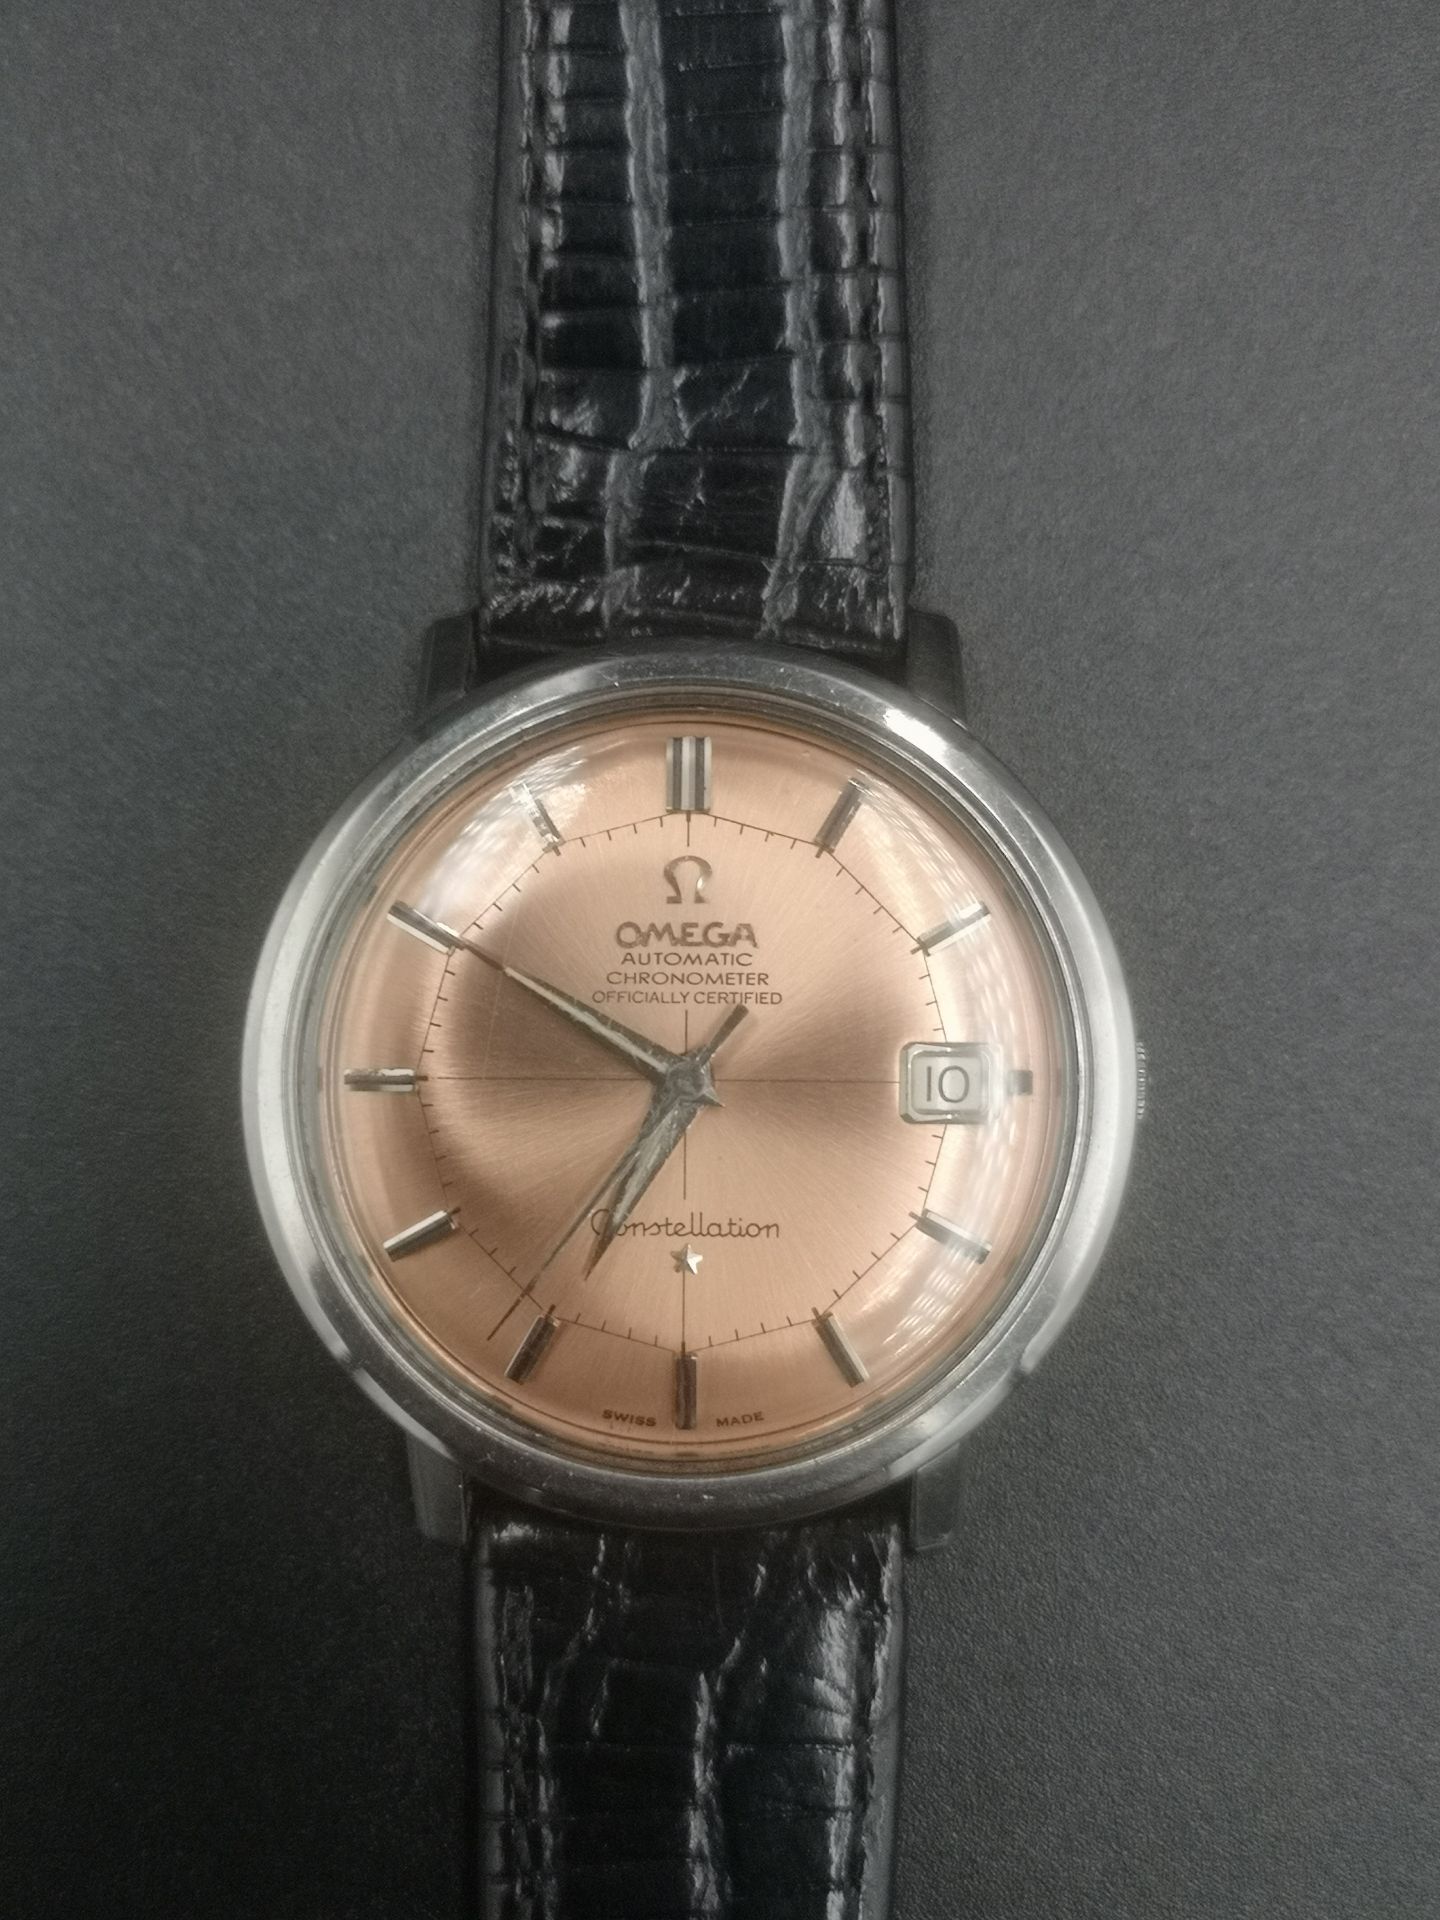 Omega Automatic Chronometer Constellation wrist watch - Image 6 of 10